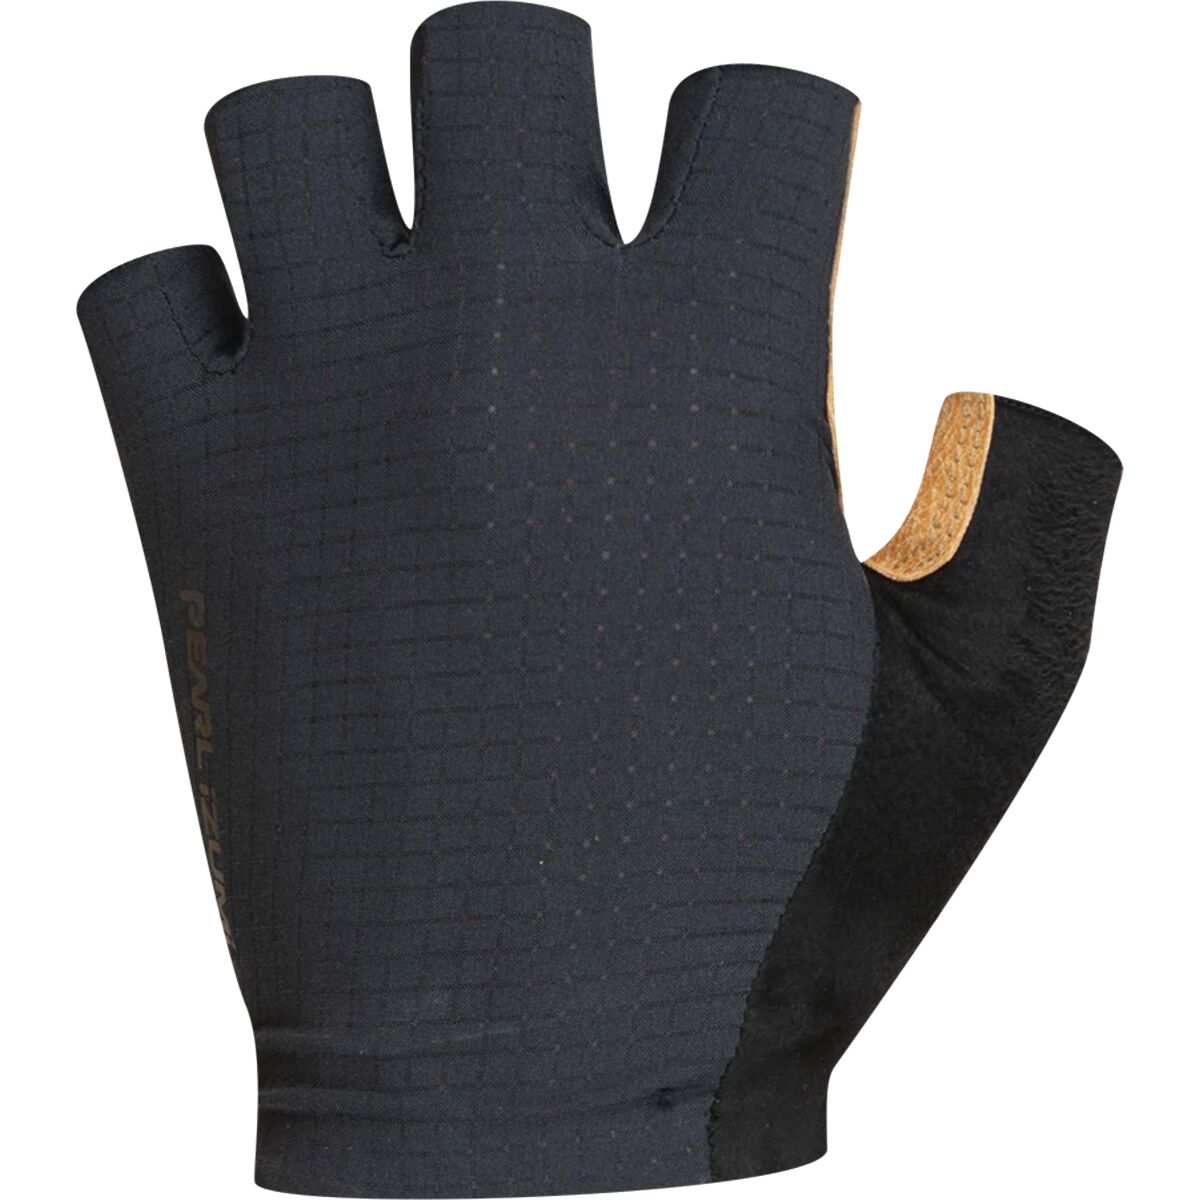 PEARL iZUMi Pro Air Glove - Men's